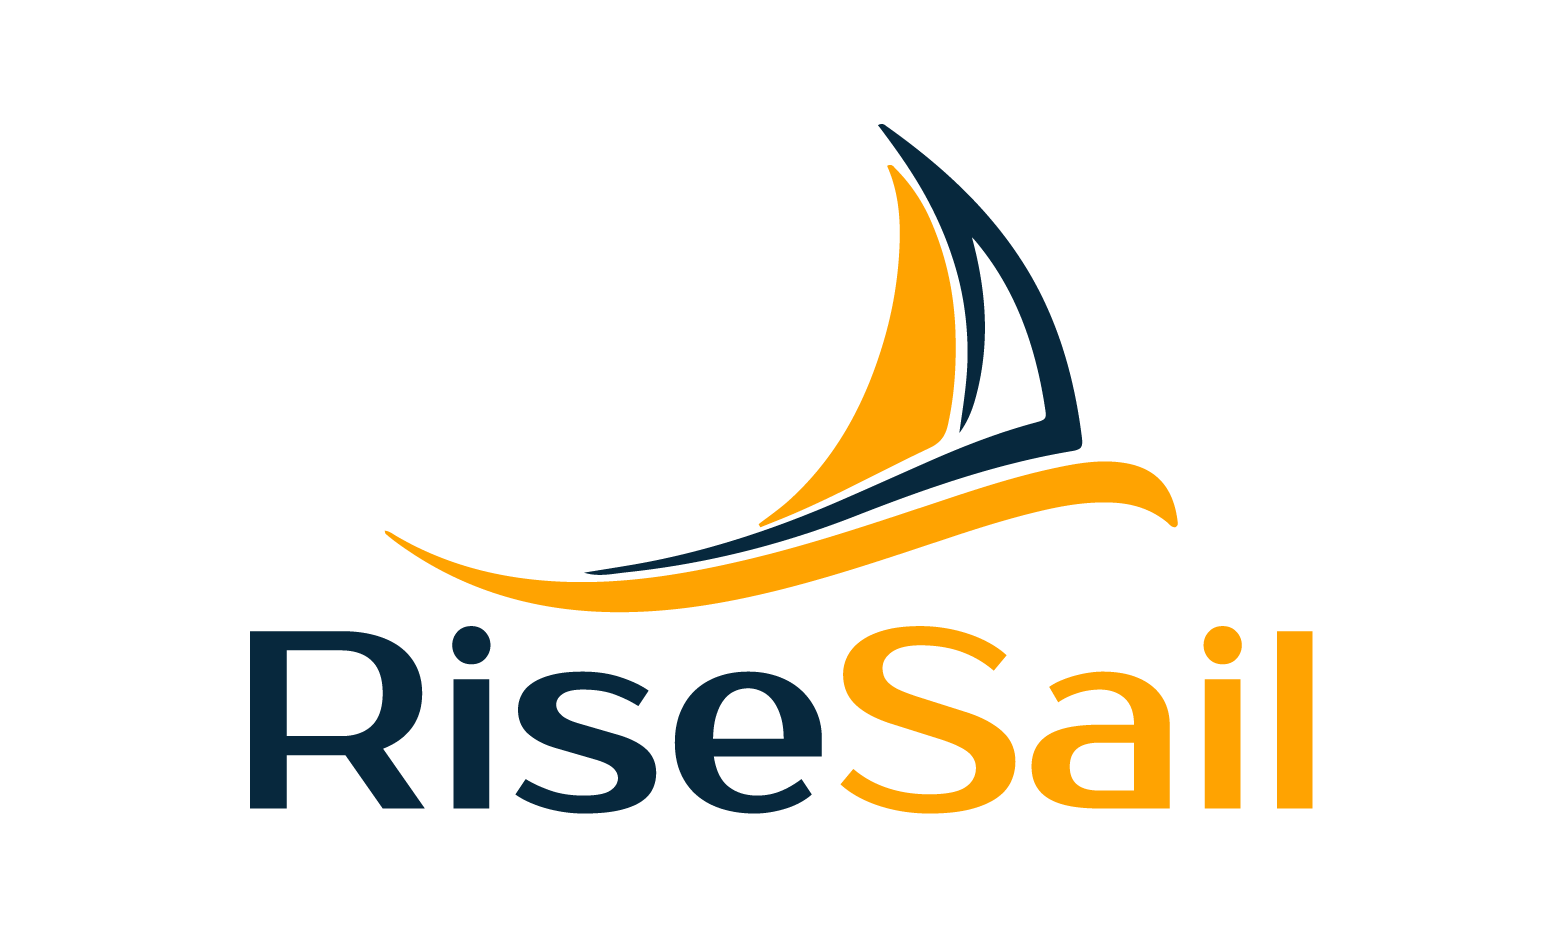 RiseSail.com - Creative brandable domain for sale